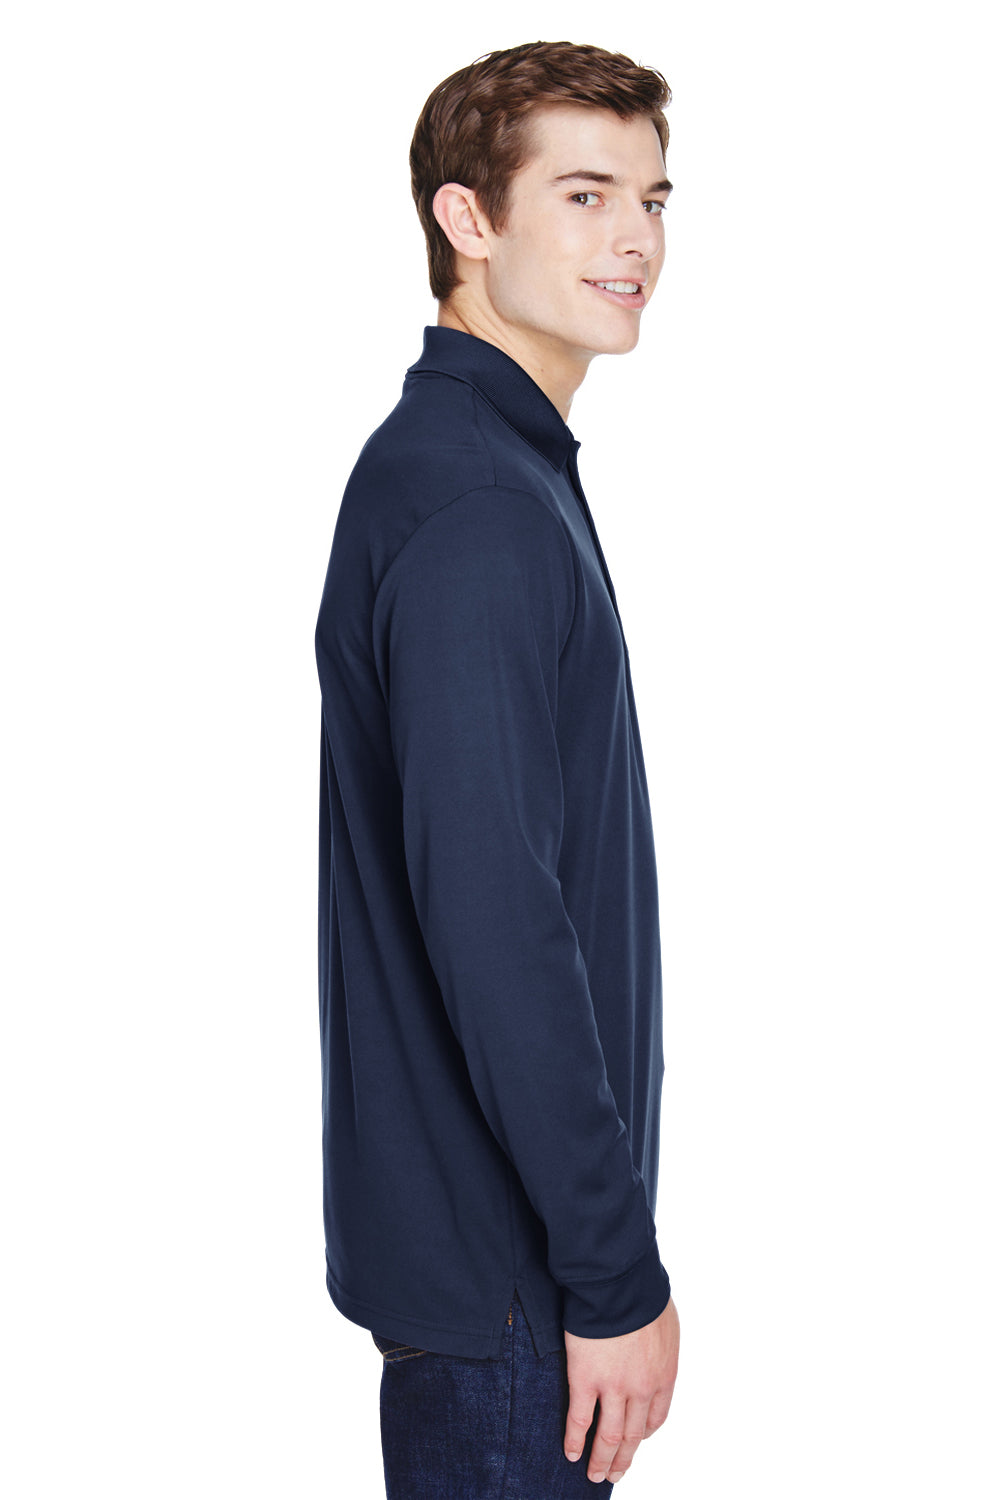 Core 365 88192P Mens Pinnacle Performance Moisture Wicking Long Sleeve Polo Shirt w/ Pocket Navy Blue Side